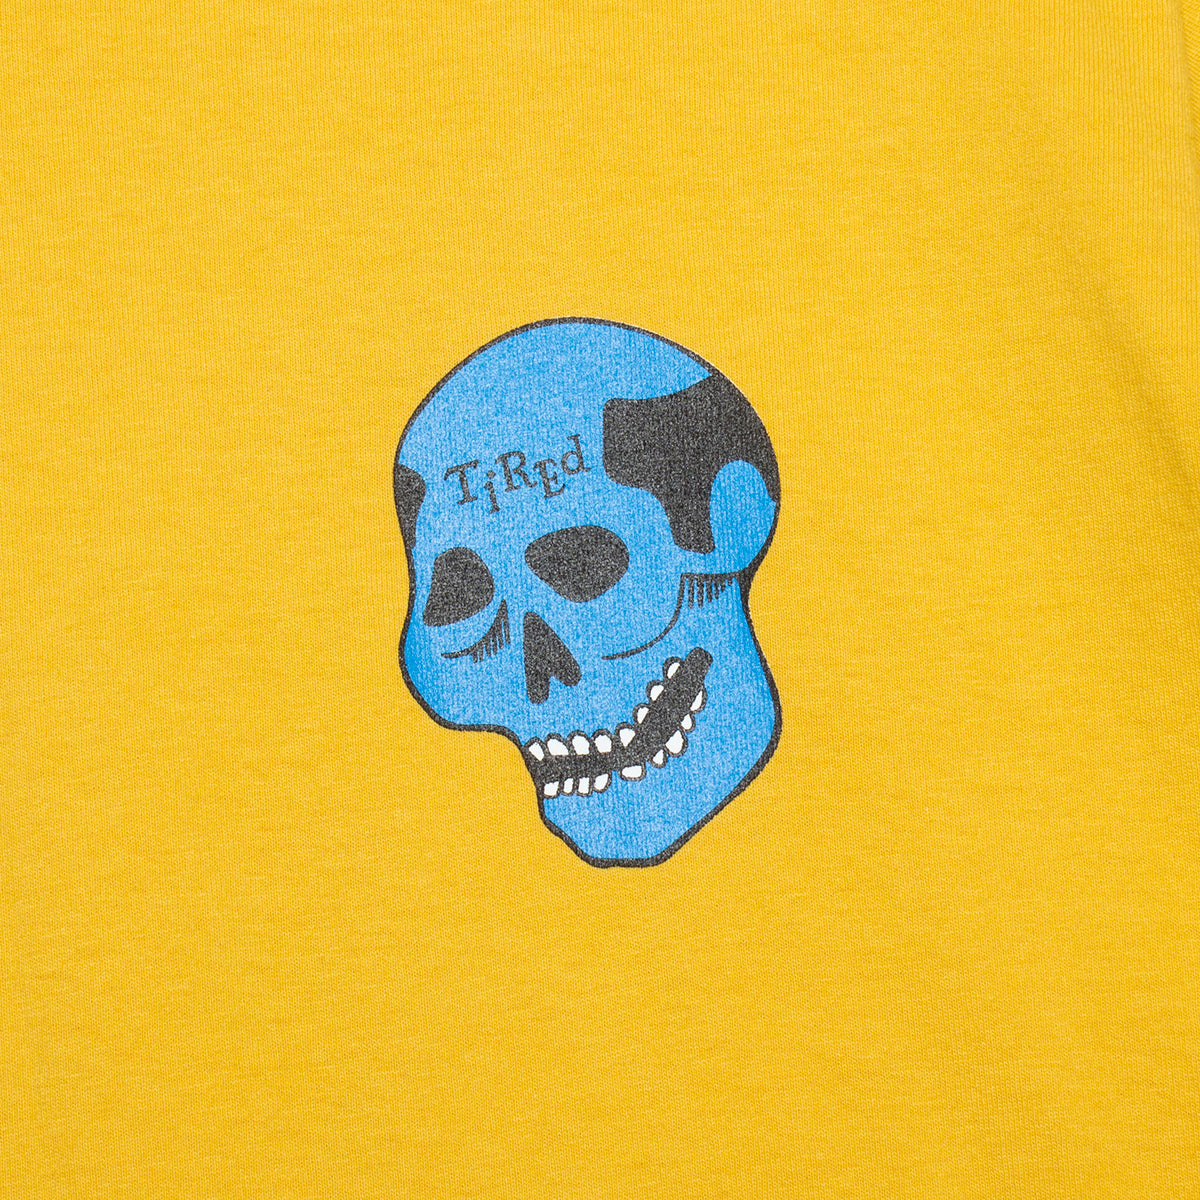 Tired Creepy Skull T-Shirt